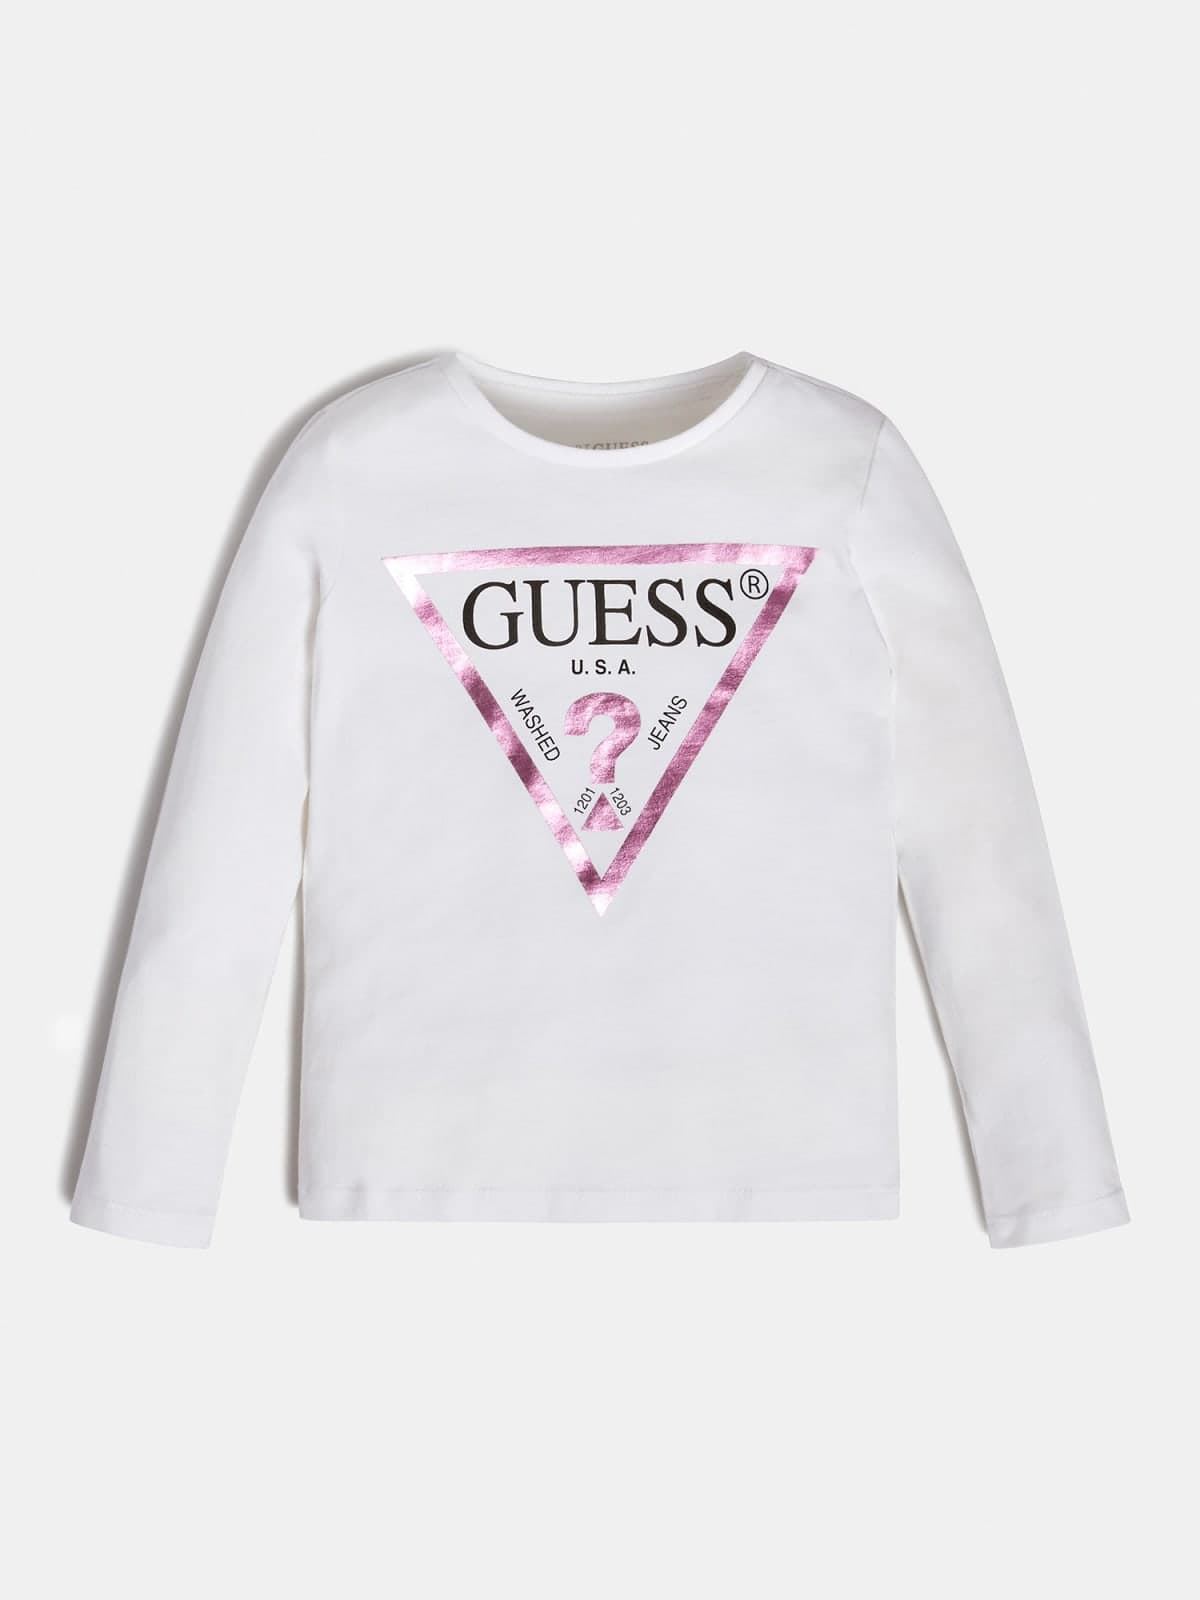 Camiseta chica Guess - Imagen 1